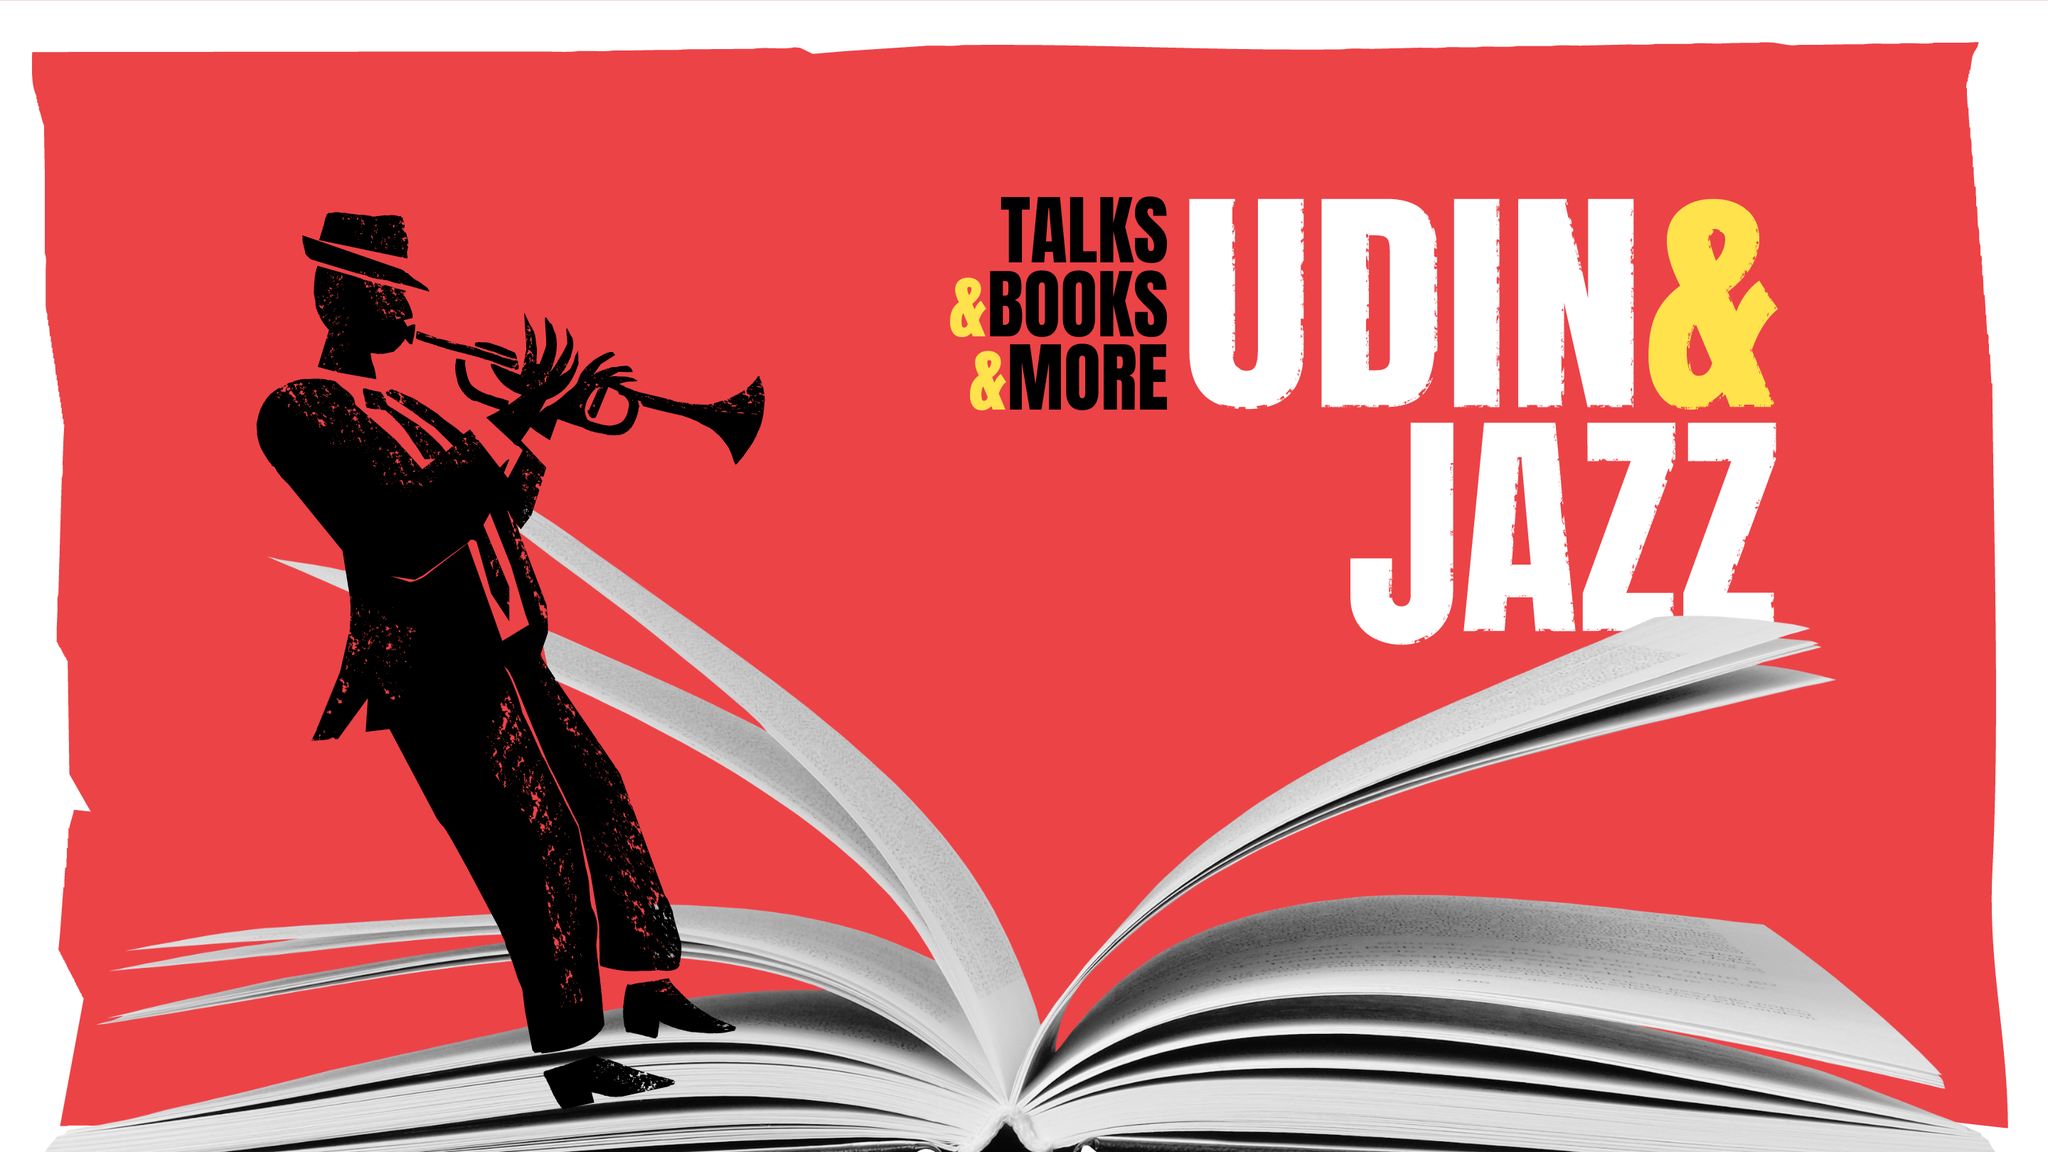 UDIN&JAZZ, Talks&Books&More